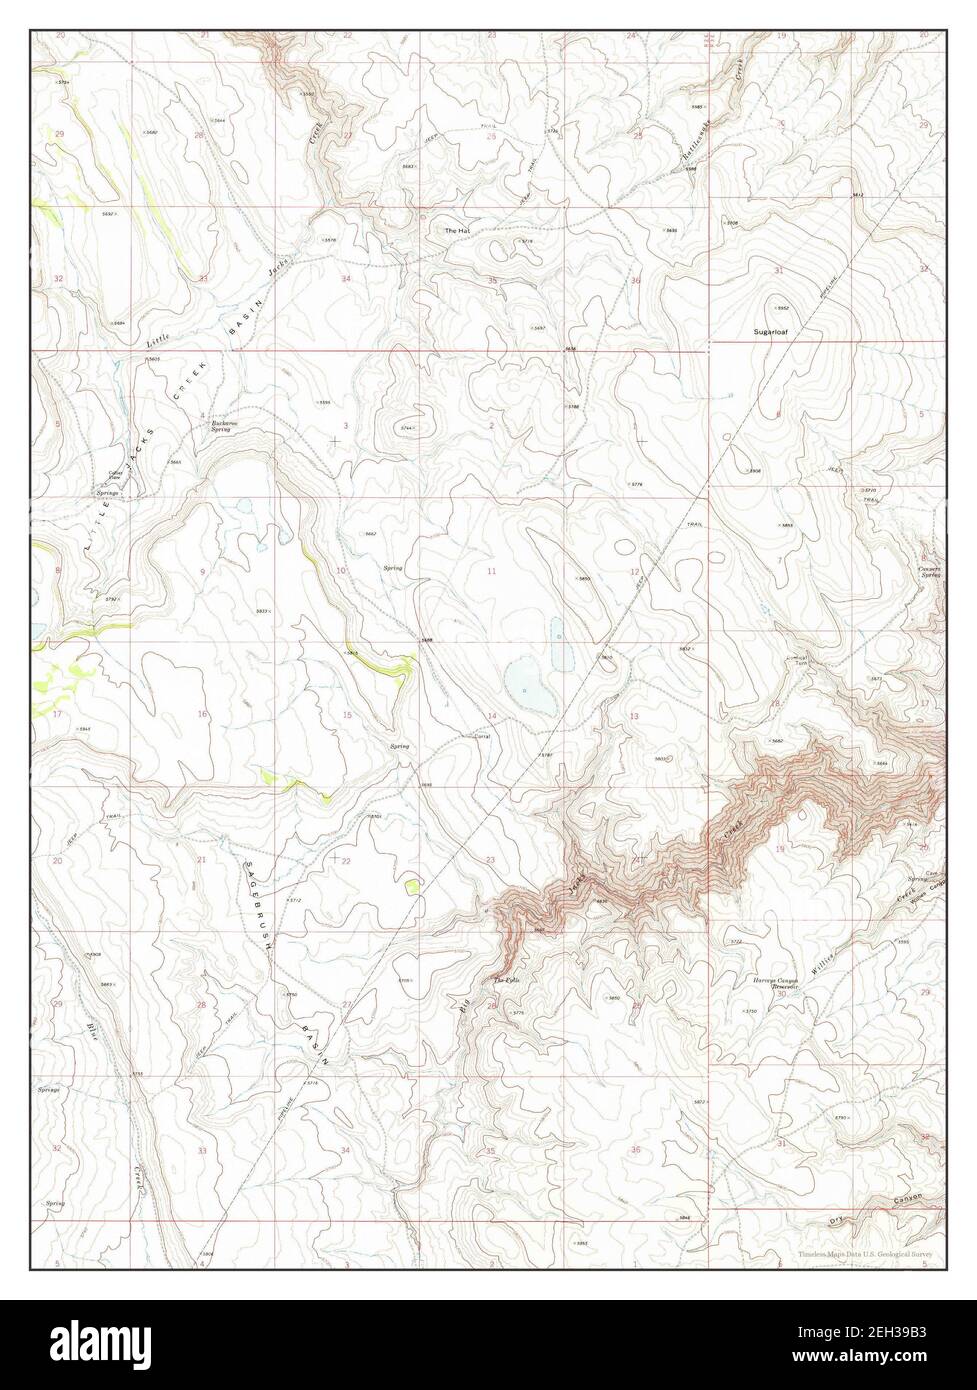 Sugarloaf, Idaho, map 1972, 1:24000, United States of America by Timeless Maps, data U.S. Geological Survey Stock Photo